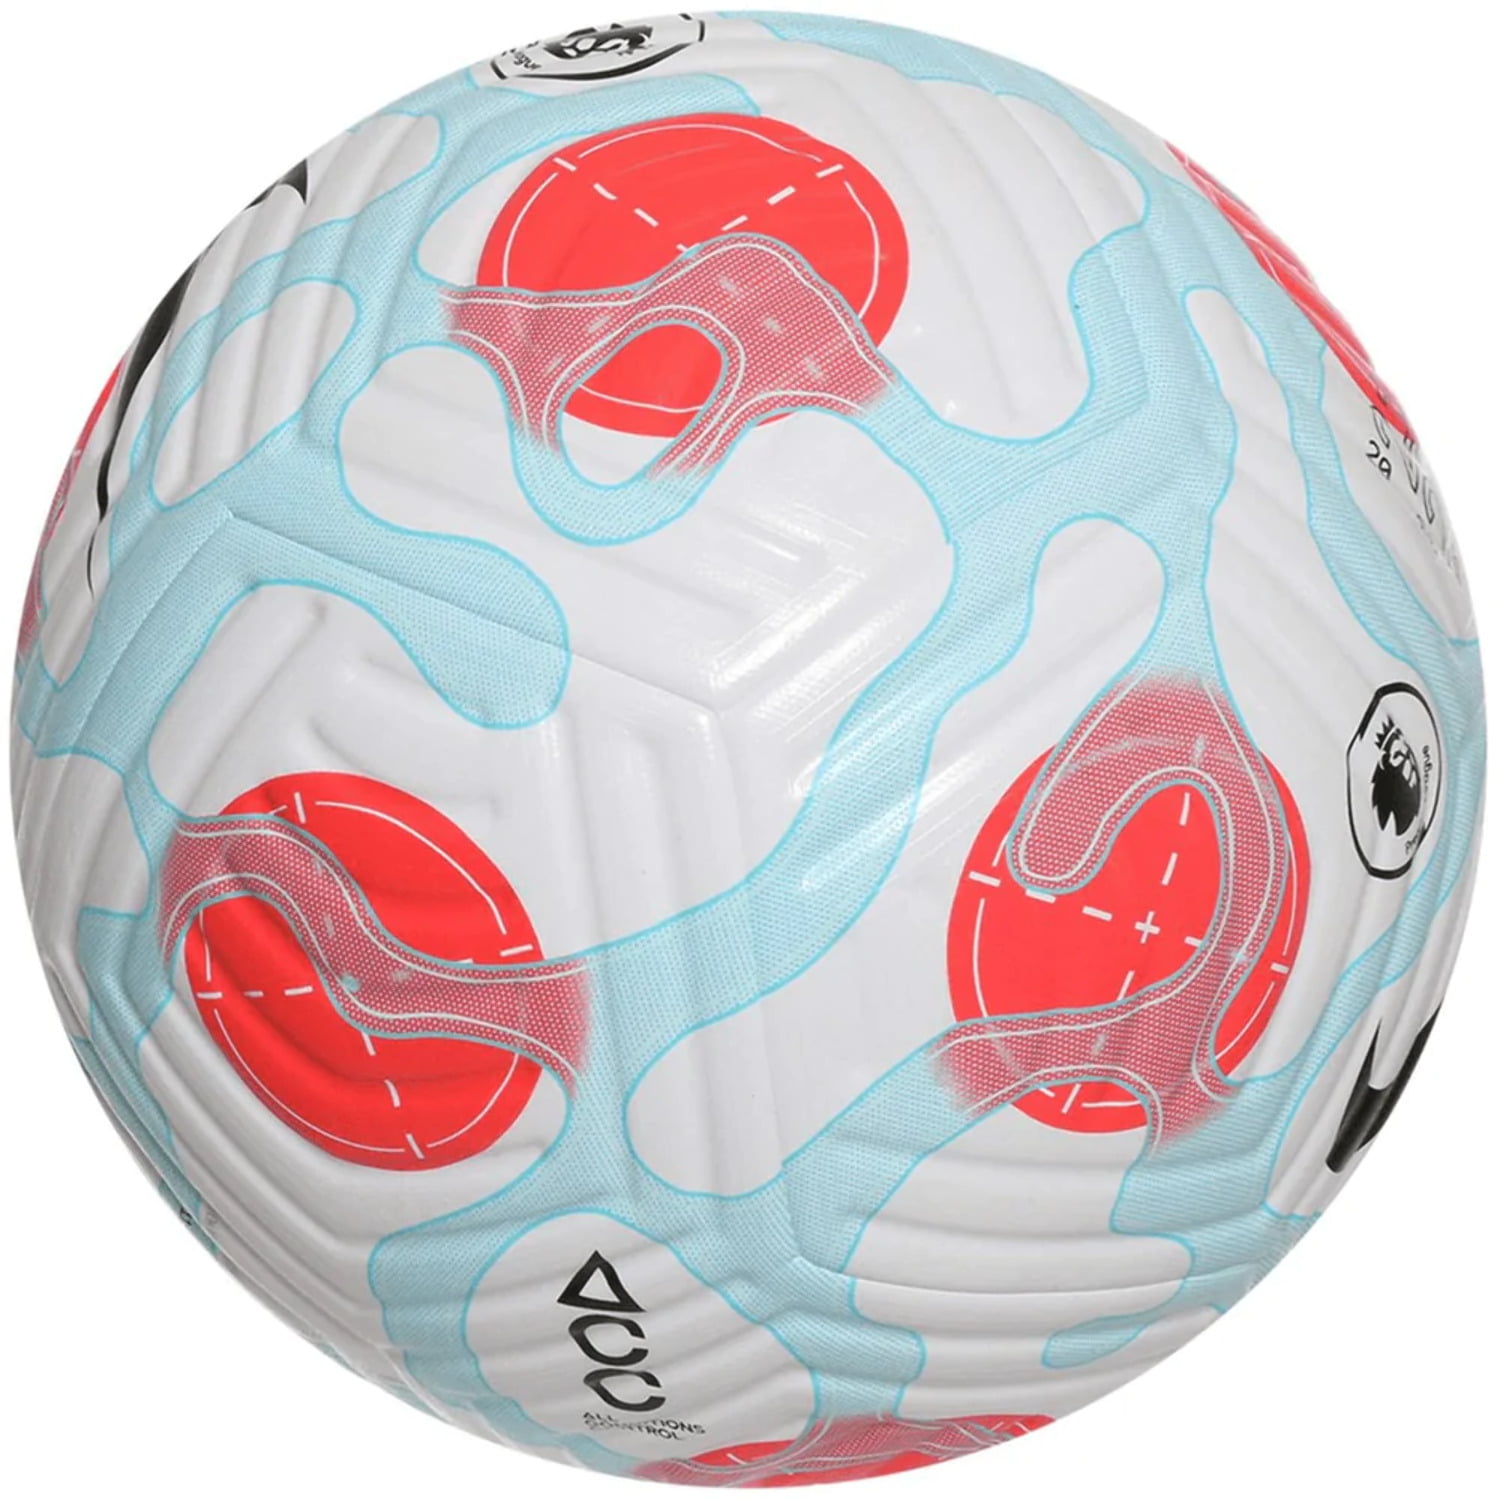 Premier League Club Elite Soccer Ball.